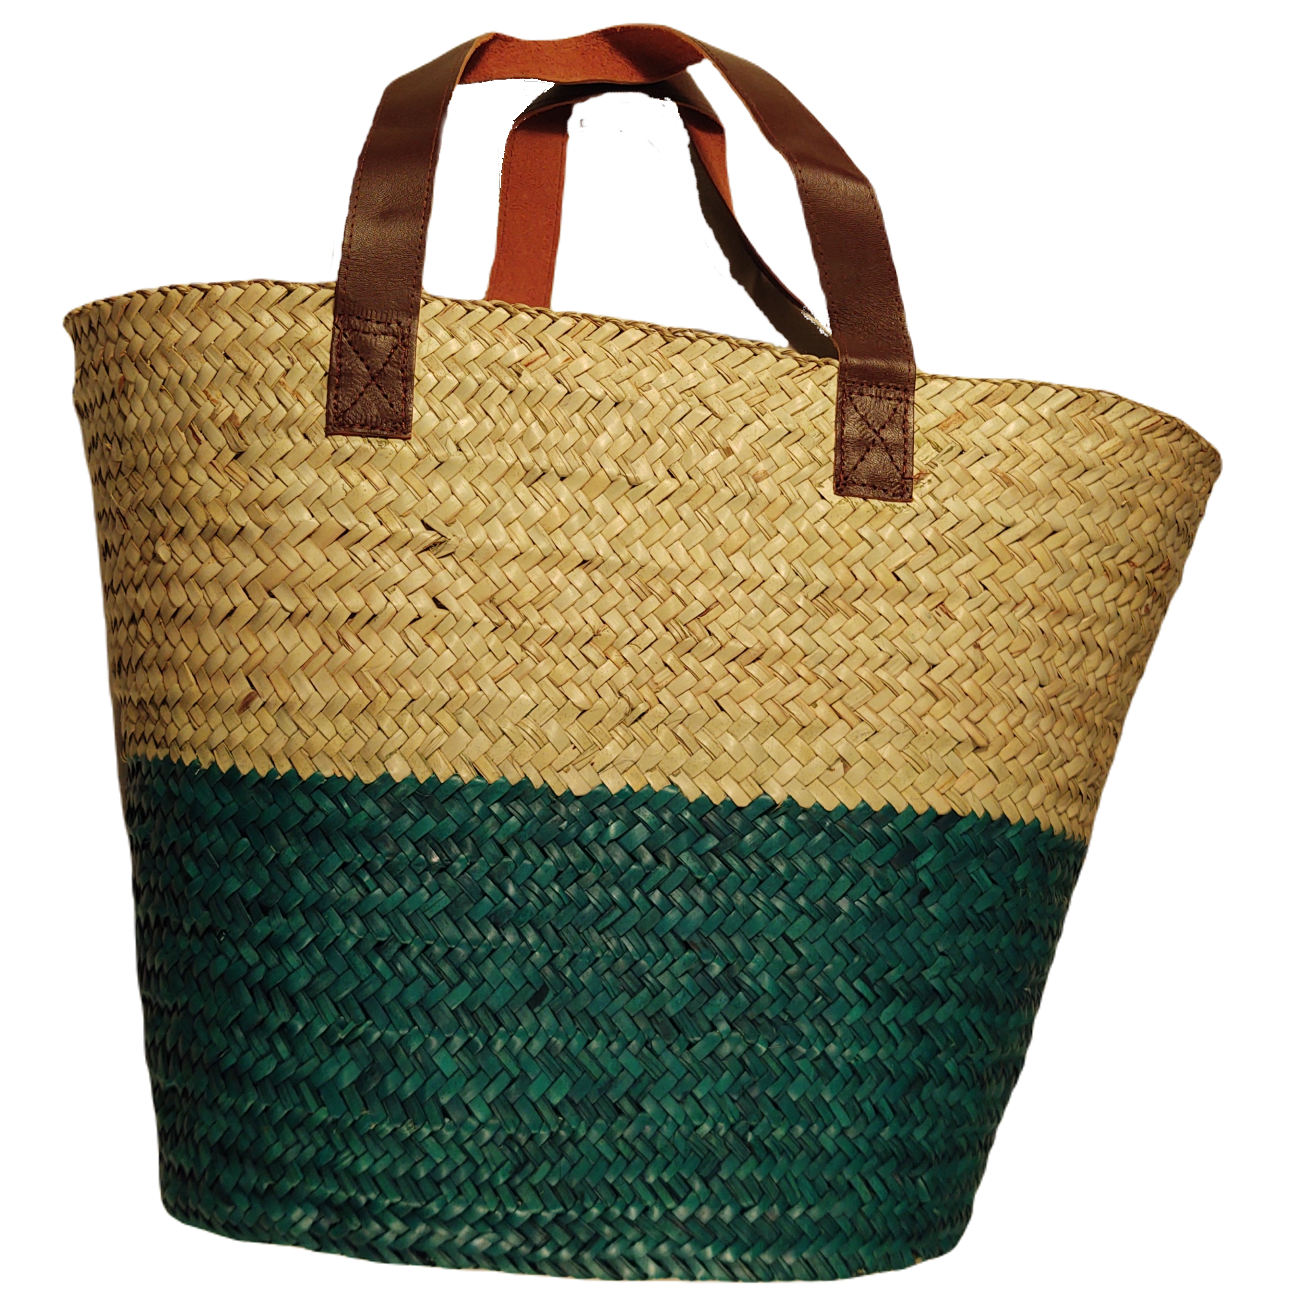 Beach baskets from Yemen